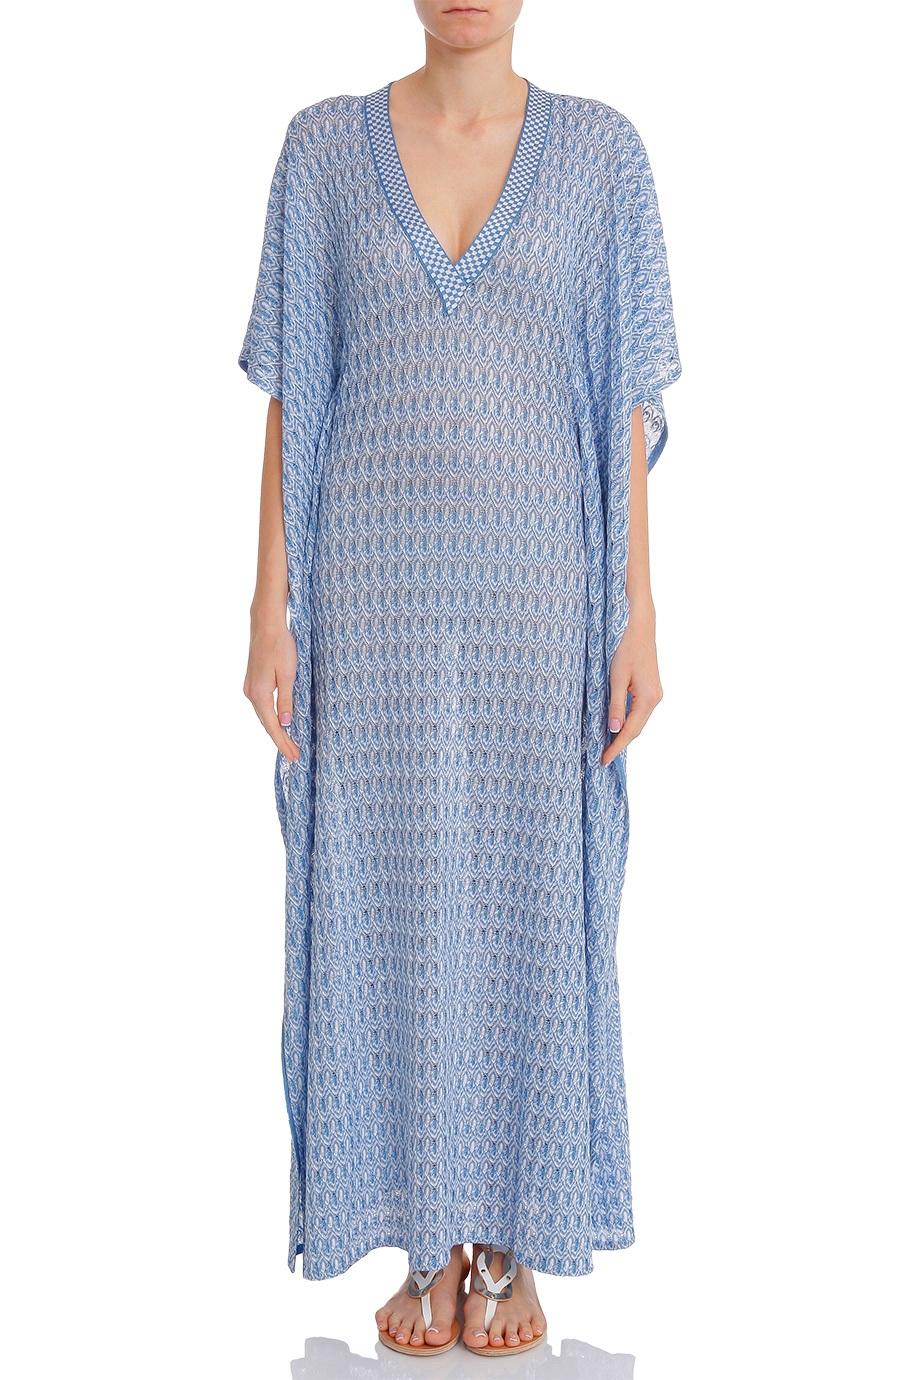 MISSONI Blue Chevron Crochet Knit Kaftan Maxi Dress Gown 42 For Sale 4